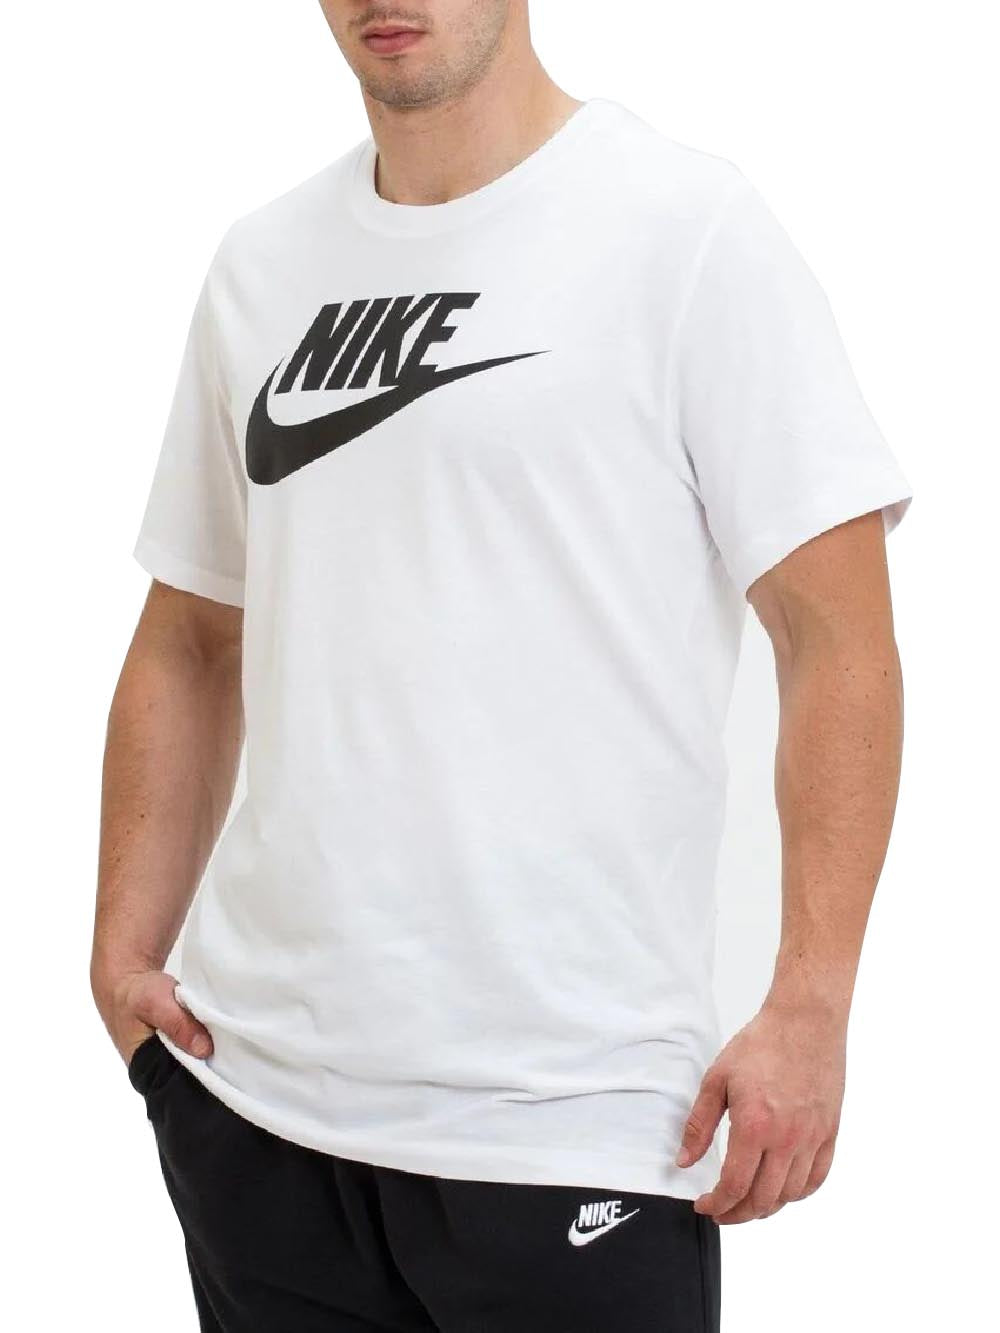 NIke T-shirt Uomo Bianco